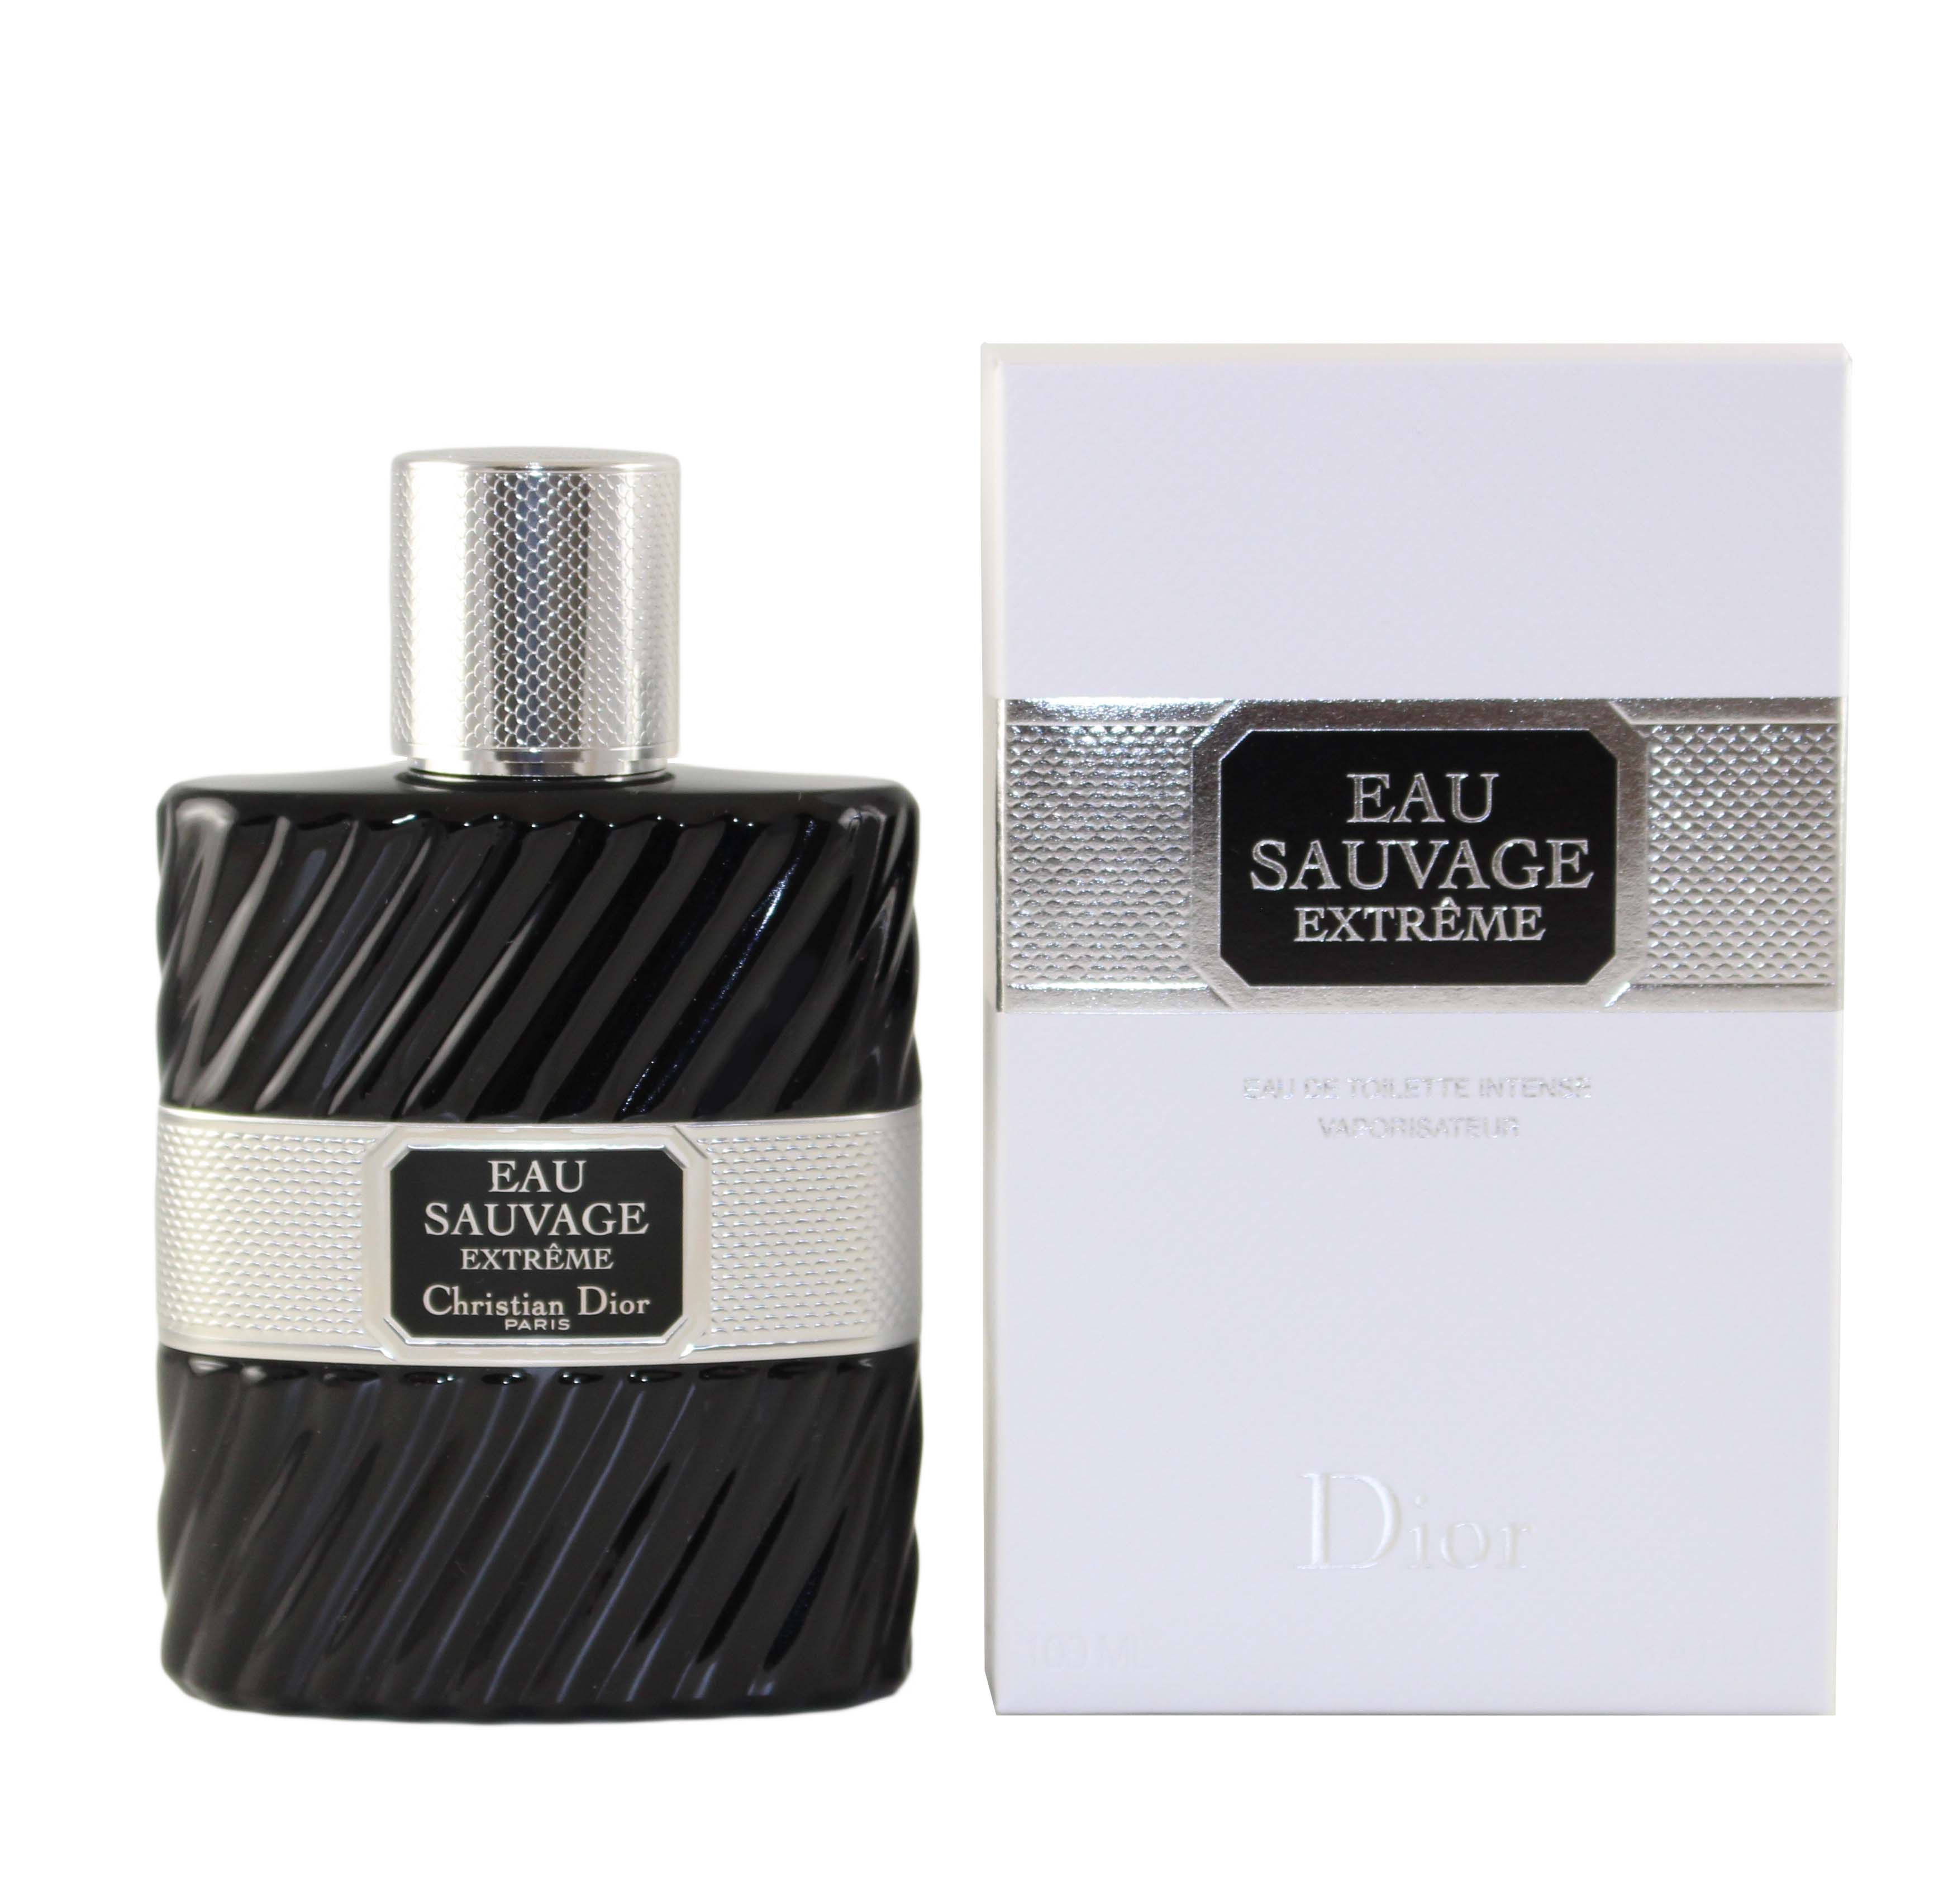 Eau Sauvage Extreme Dior cologne - a fragrance for men 1984